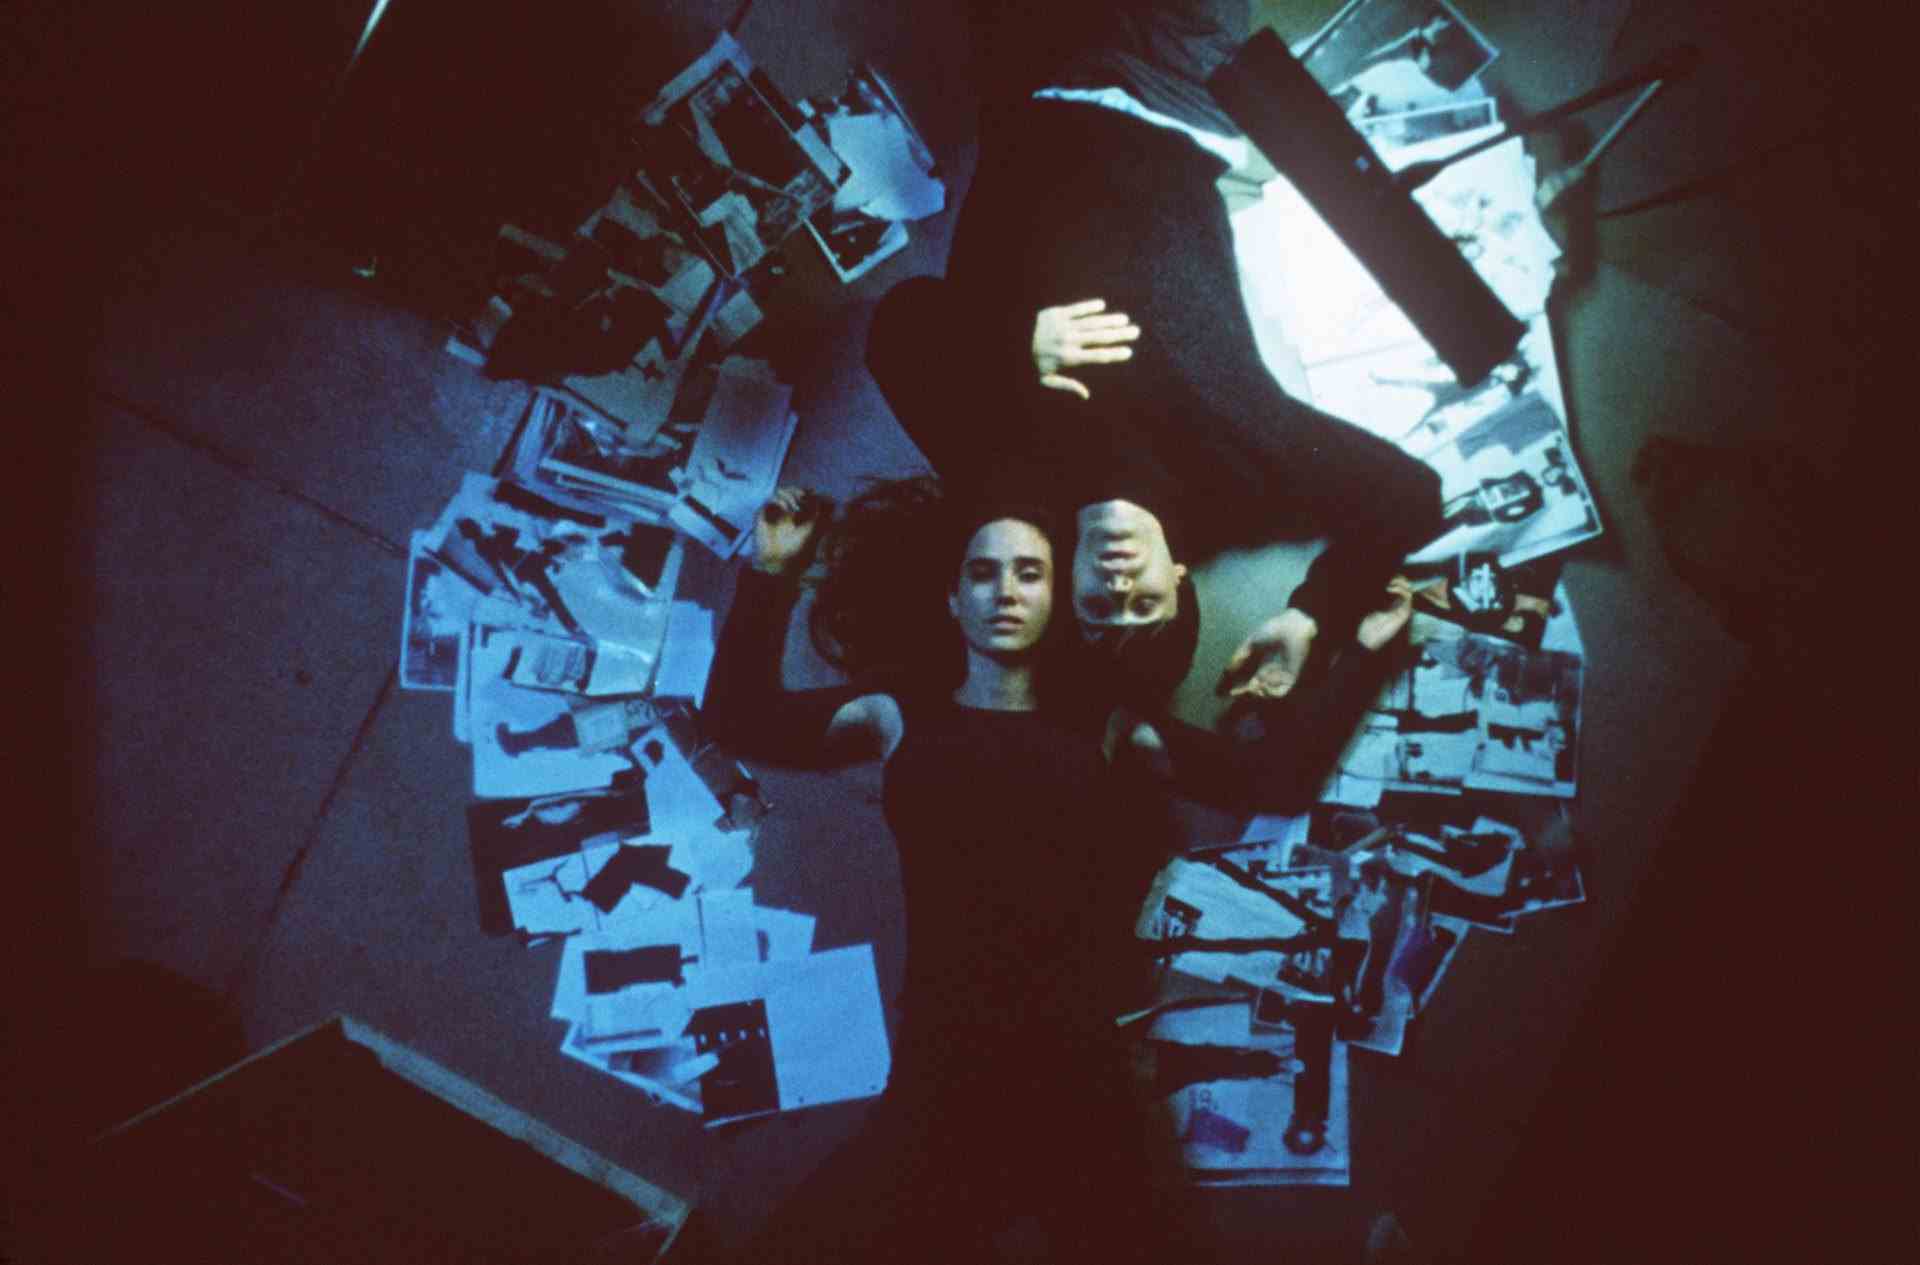 Leto und Connelly in „Requiem For A Dream“ 